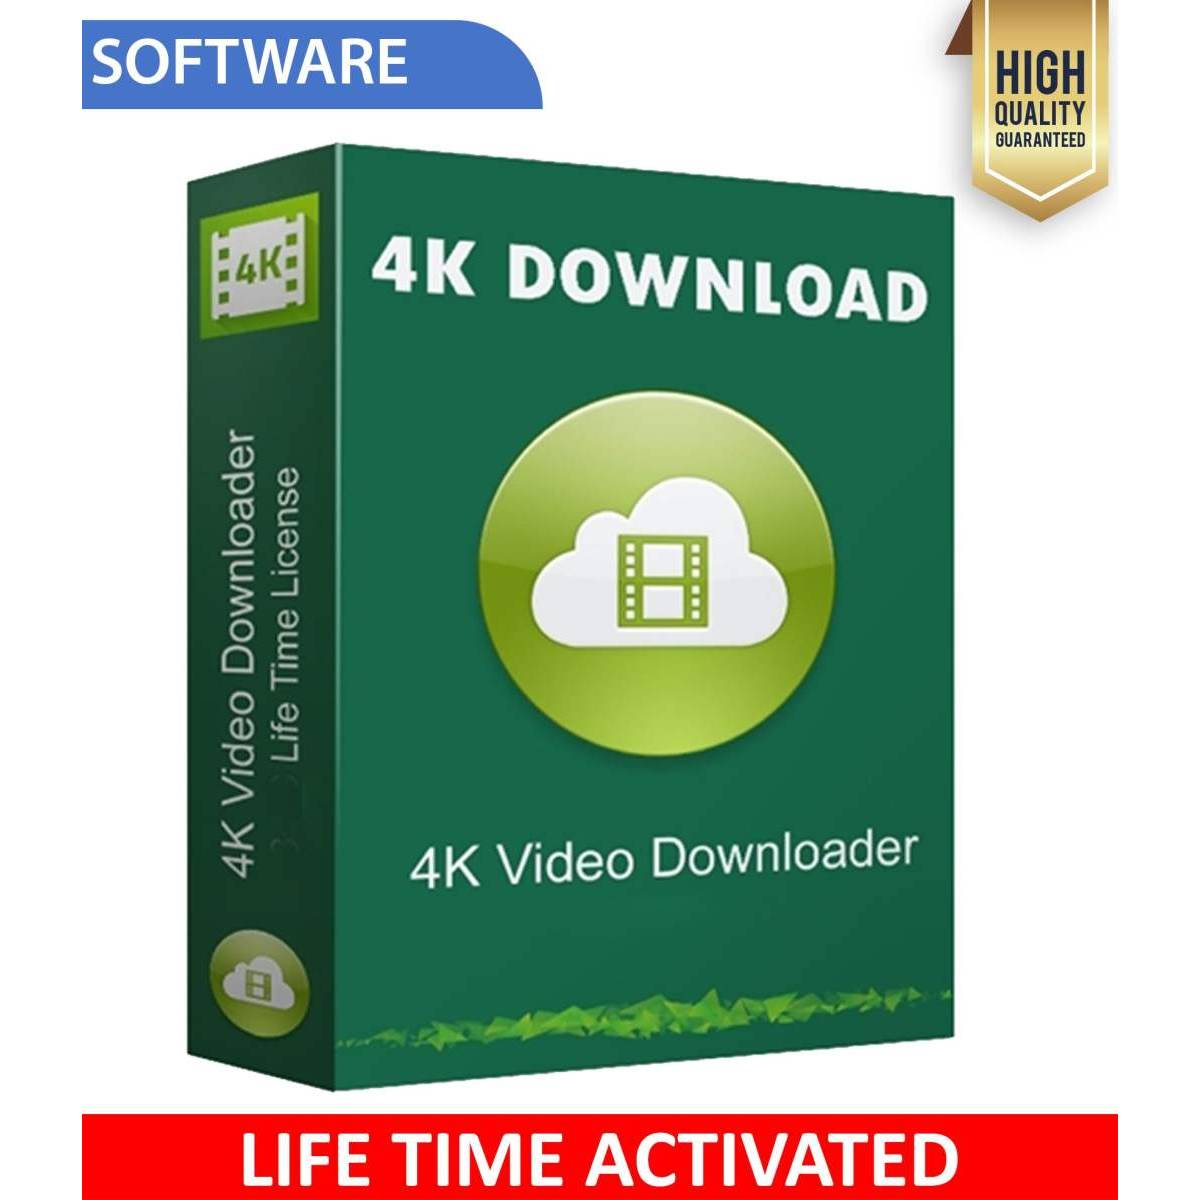 4k Video Downloader License Key + Serial Key [Updated] Free Download